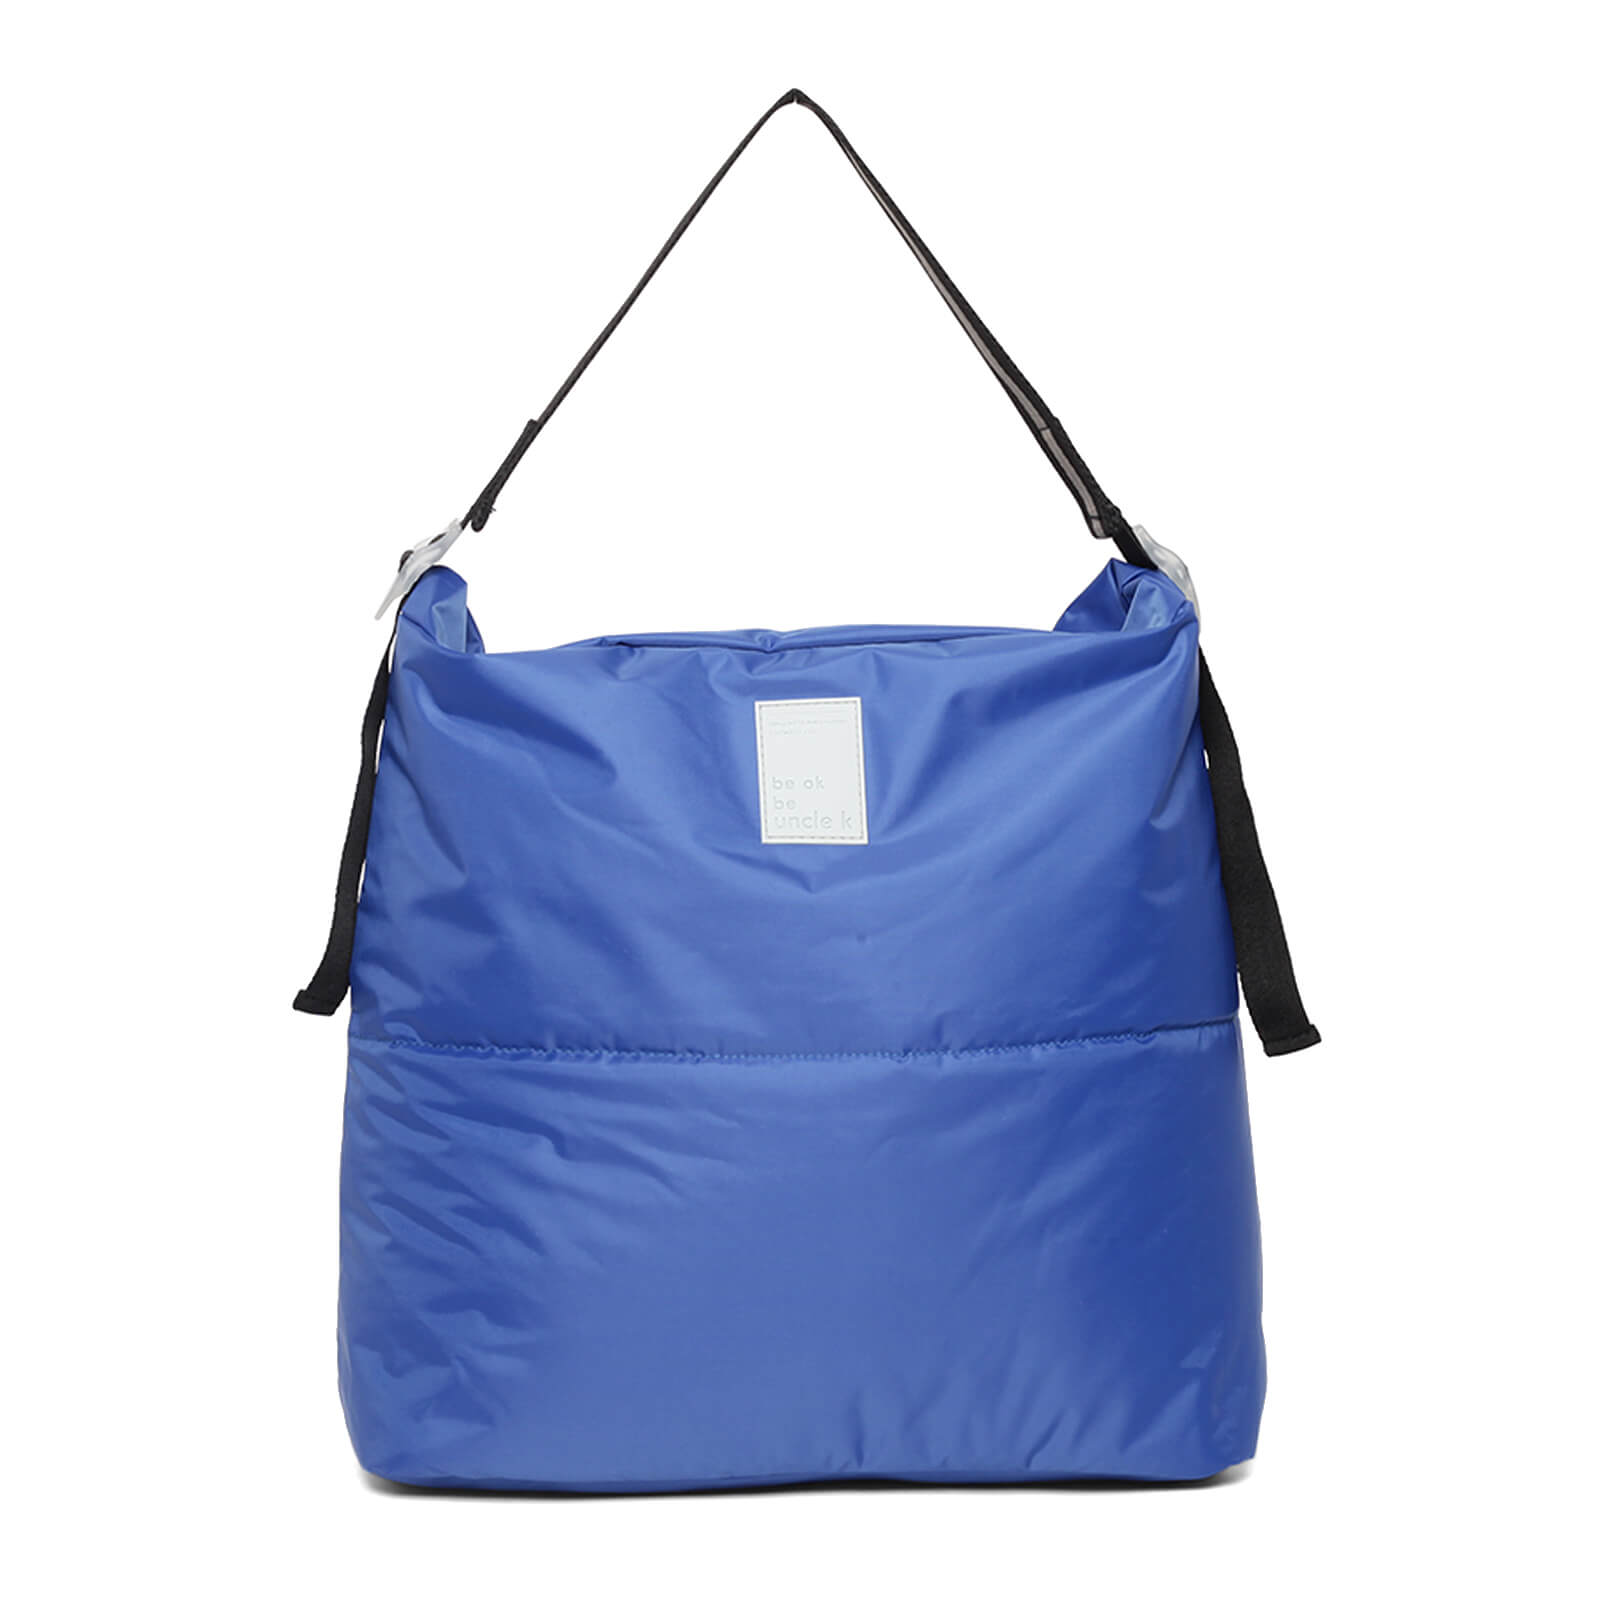 bolsa-shopping-bag-nylon-60970_unclek_royal-1